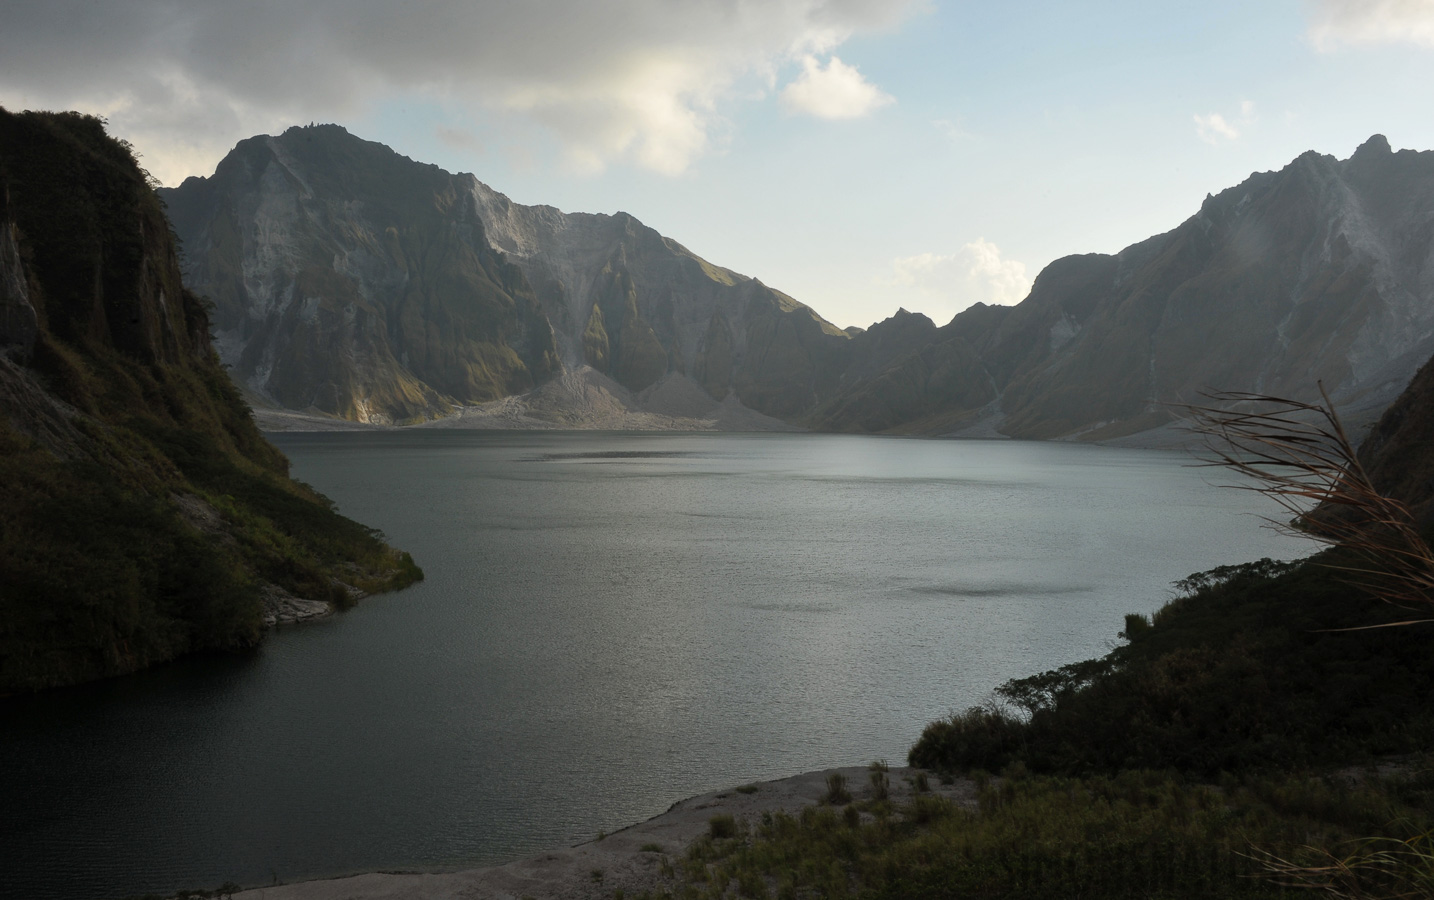 Mount Pinatubo [32 mm, 1/100 sec at f / 22, ISO 400]